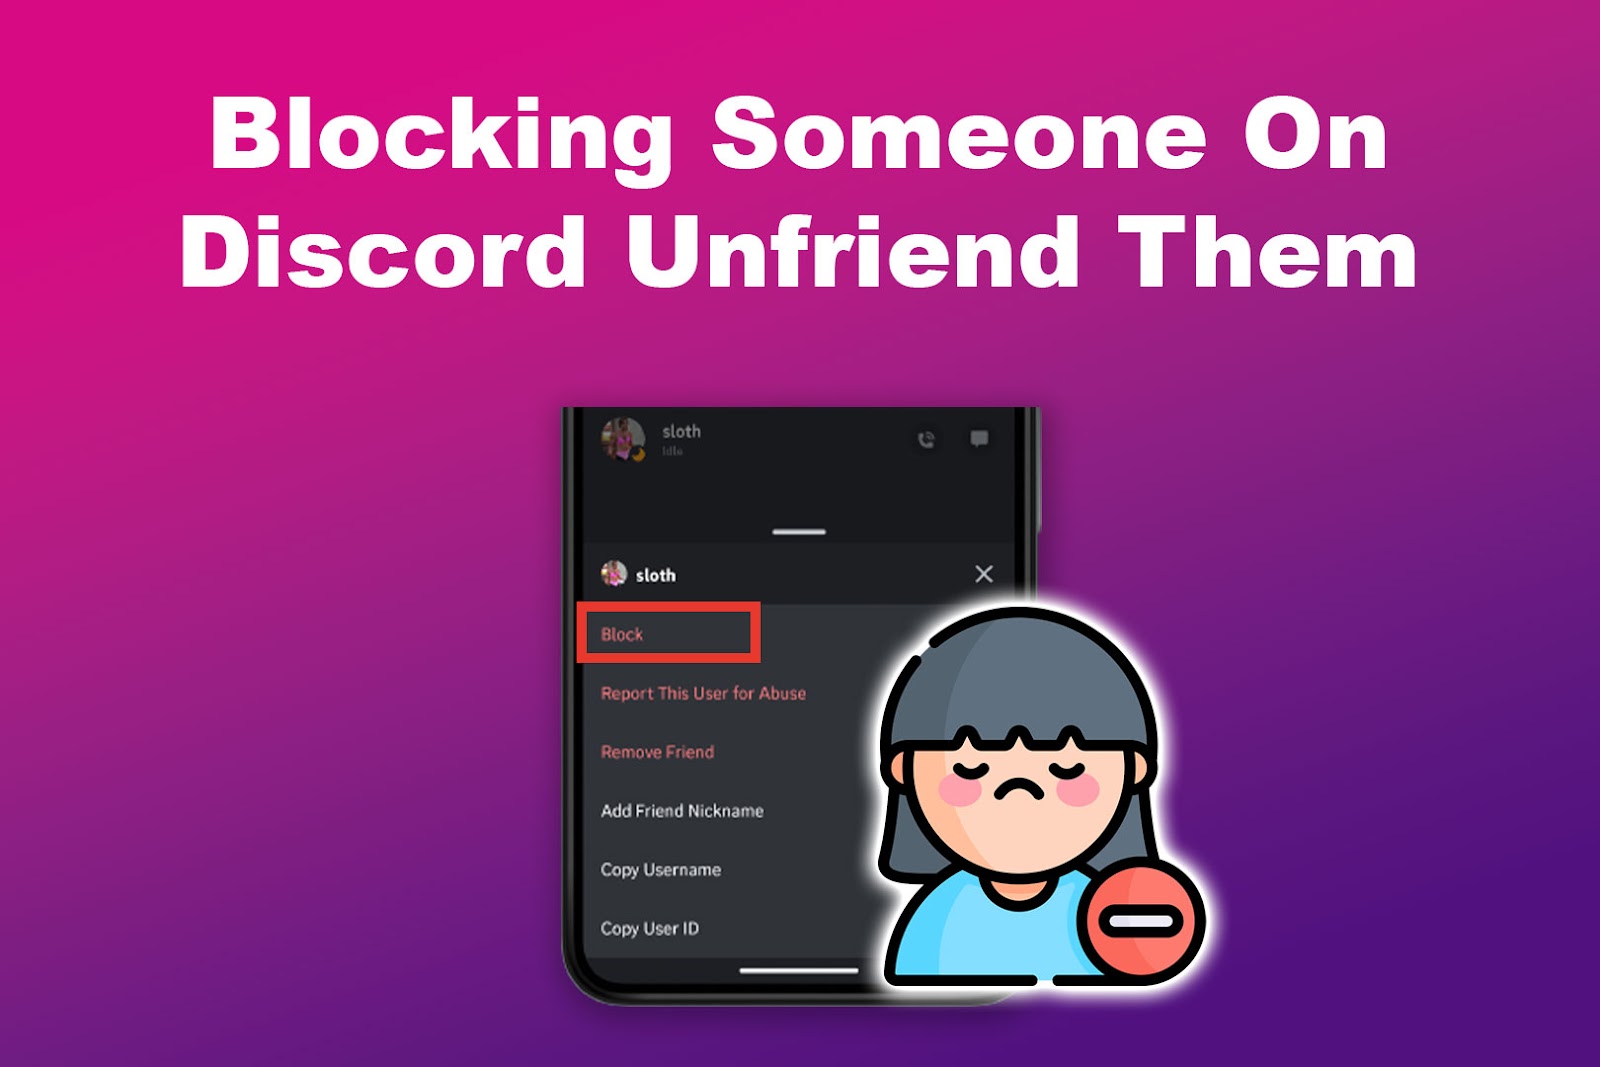 Does Blocking Someone On Discord Unfriend Them